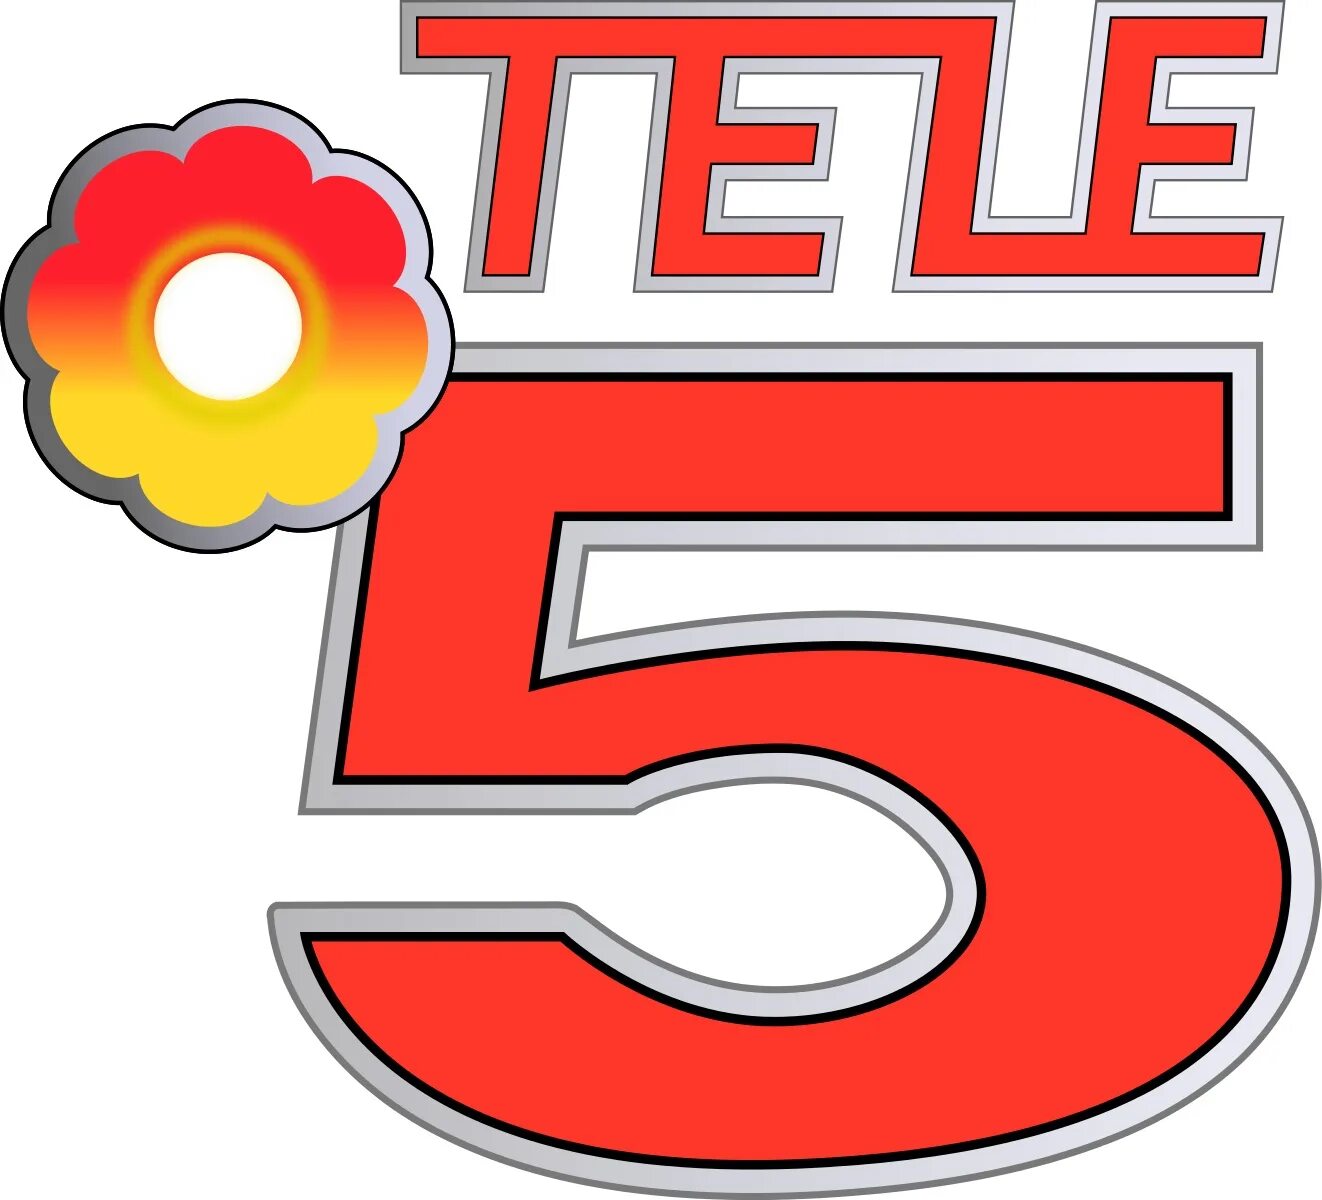 Тел 05. Tele5. Tele 5 Germany. Логотип 5орочки. SFC 5 логотип.